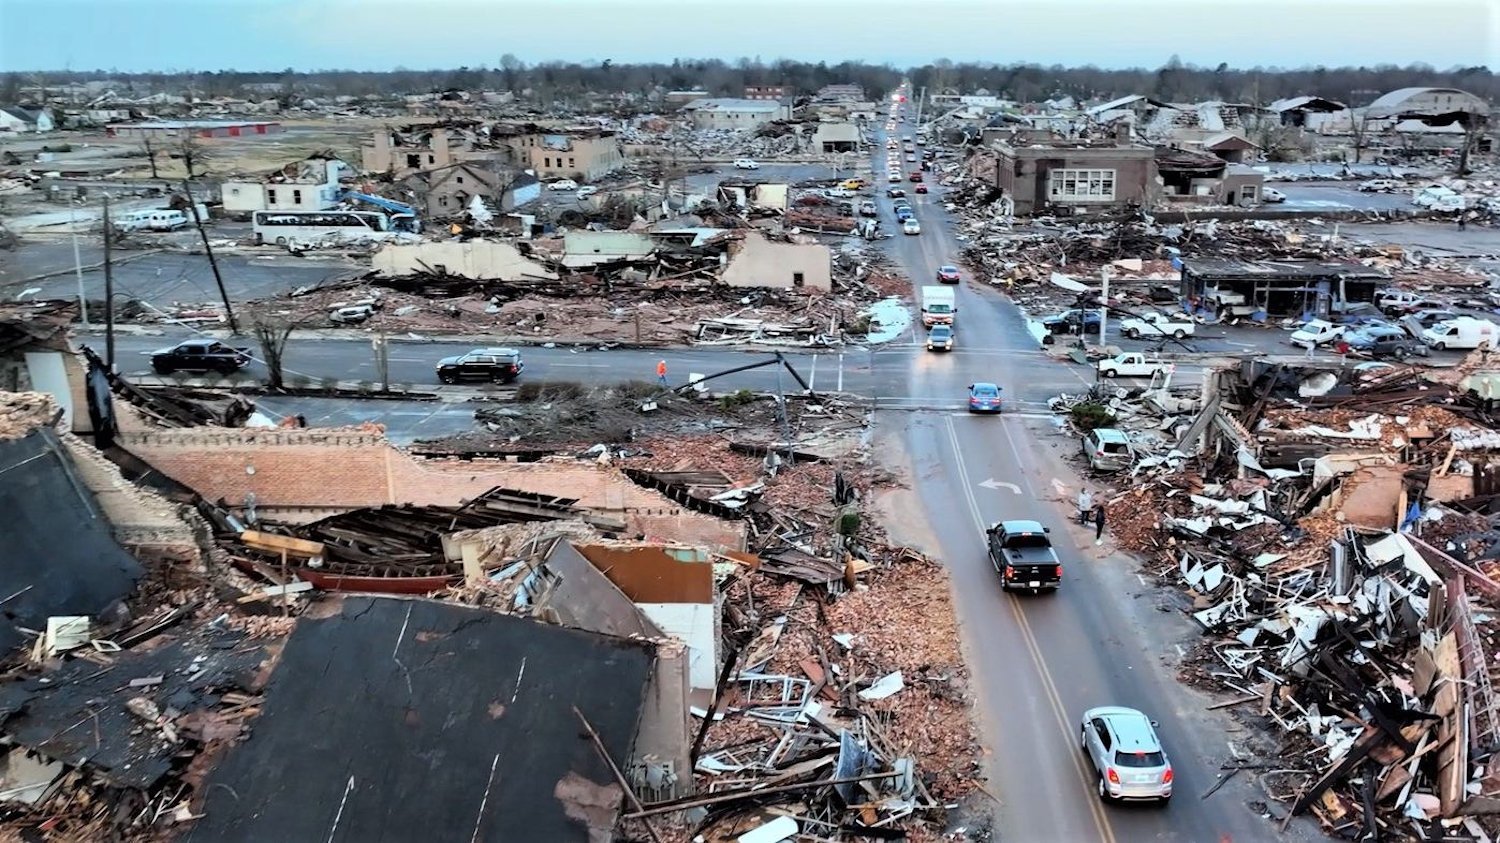 The destruction in Mayfield, Kentucky